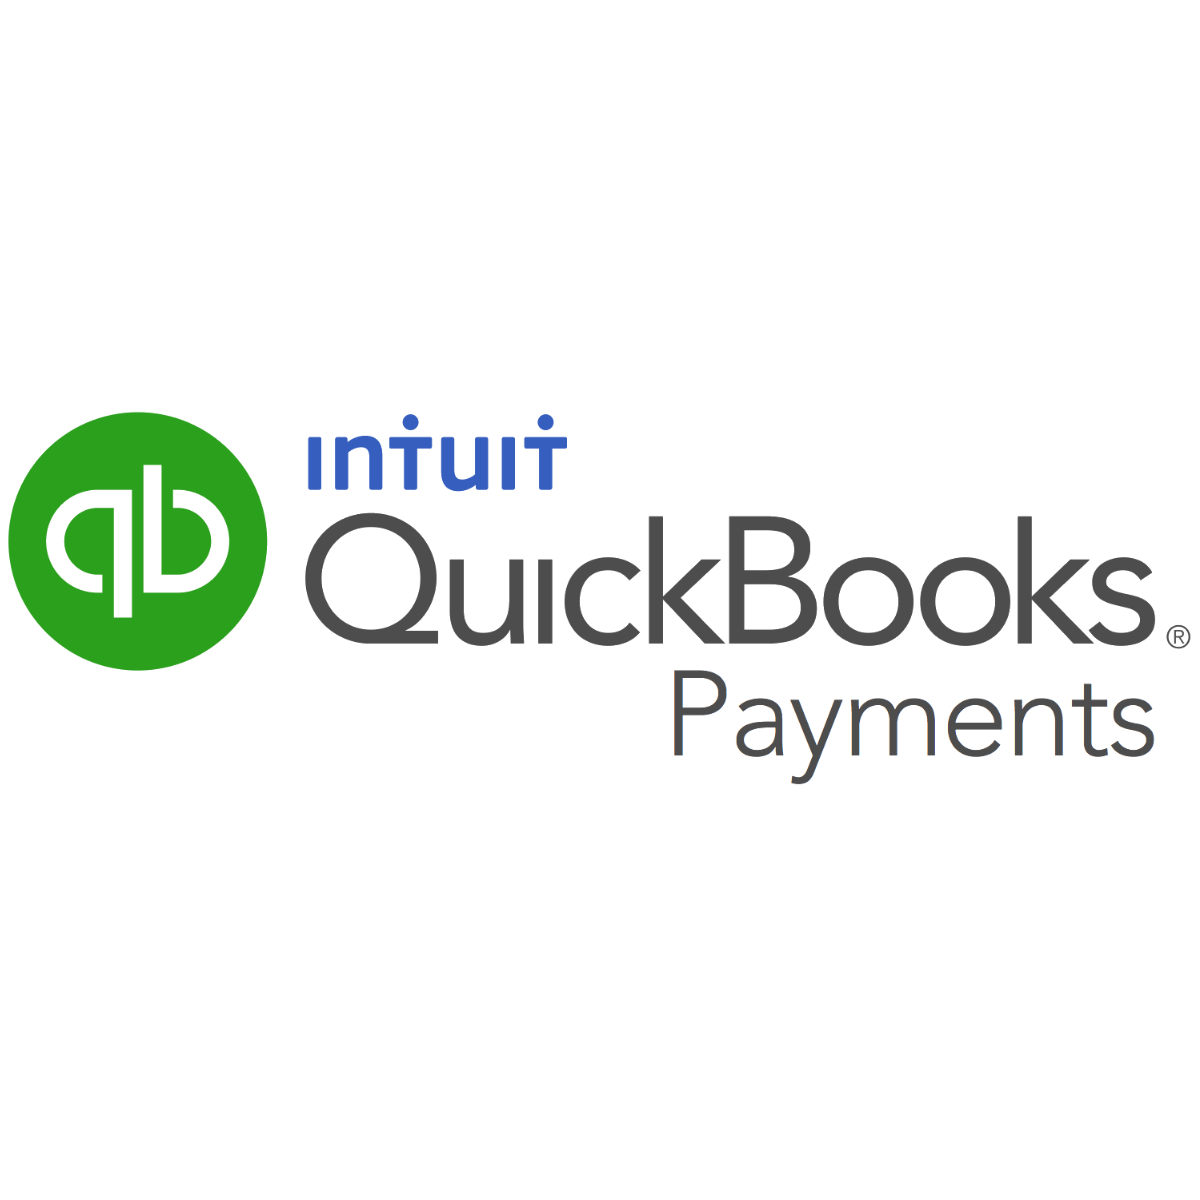 intuit quickbooks premier download 1 2017